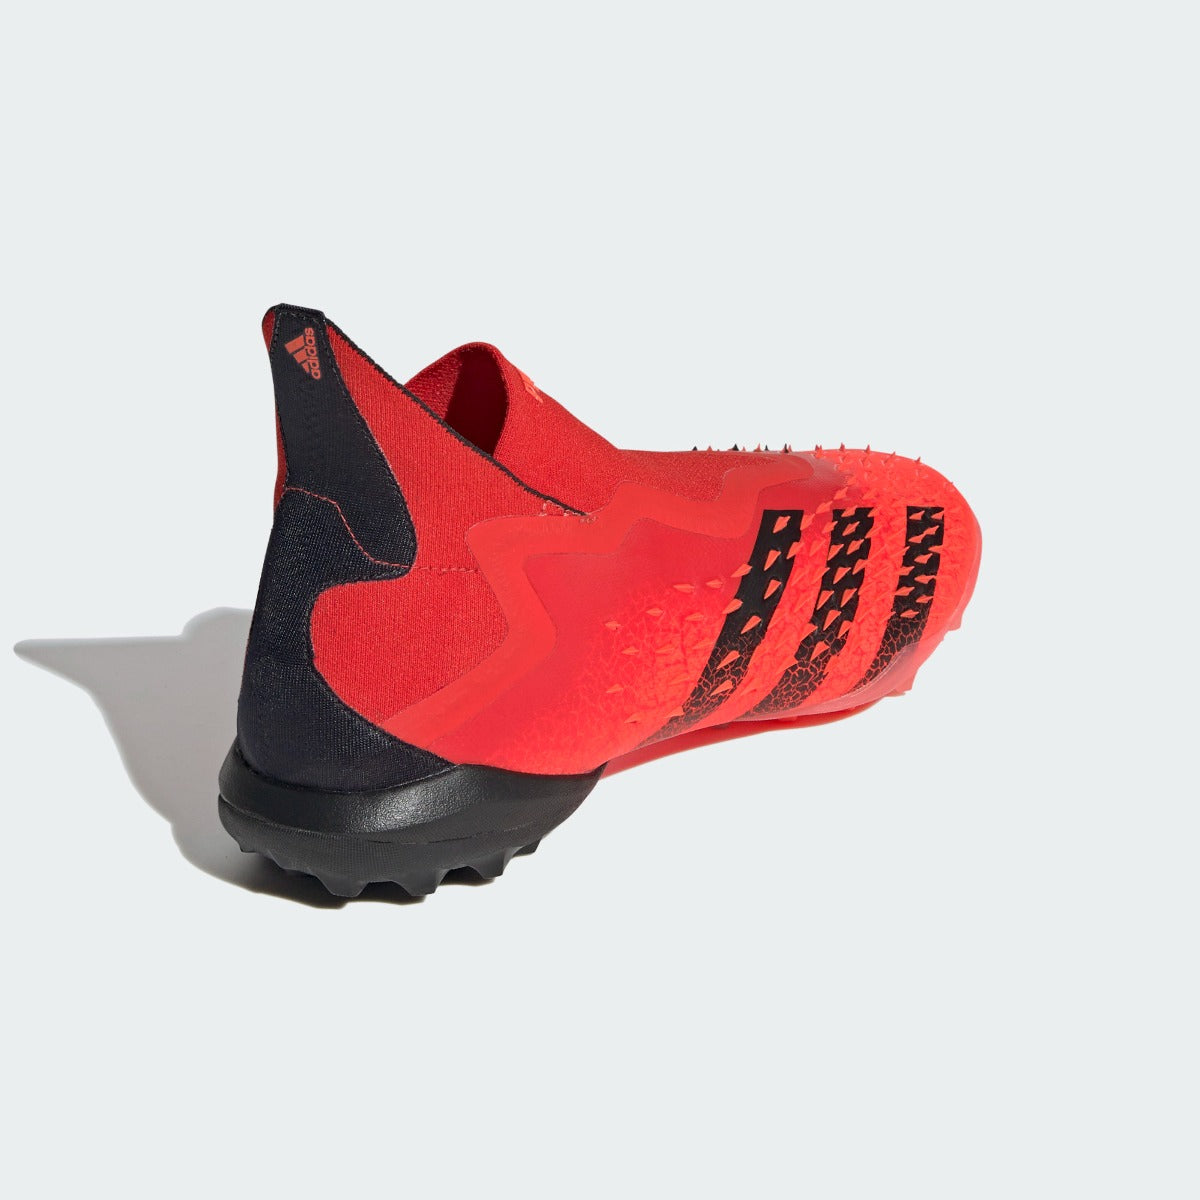 Adidas Predator Freak + TF - Red-Black (Diagonal 2)